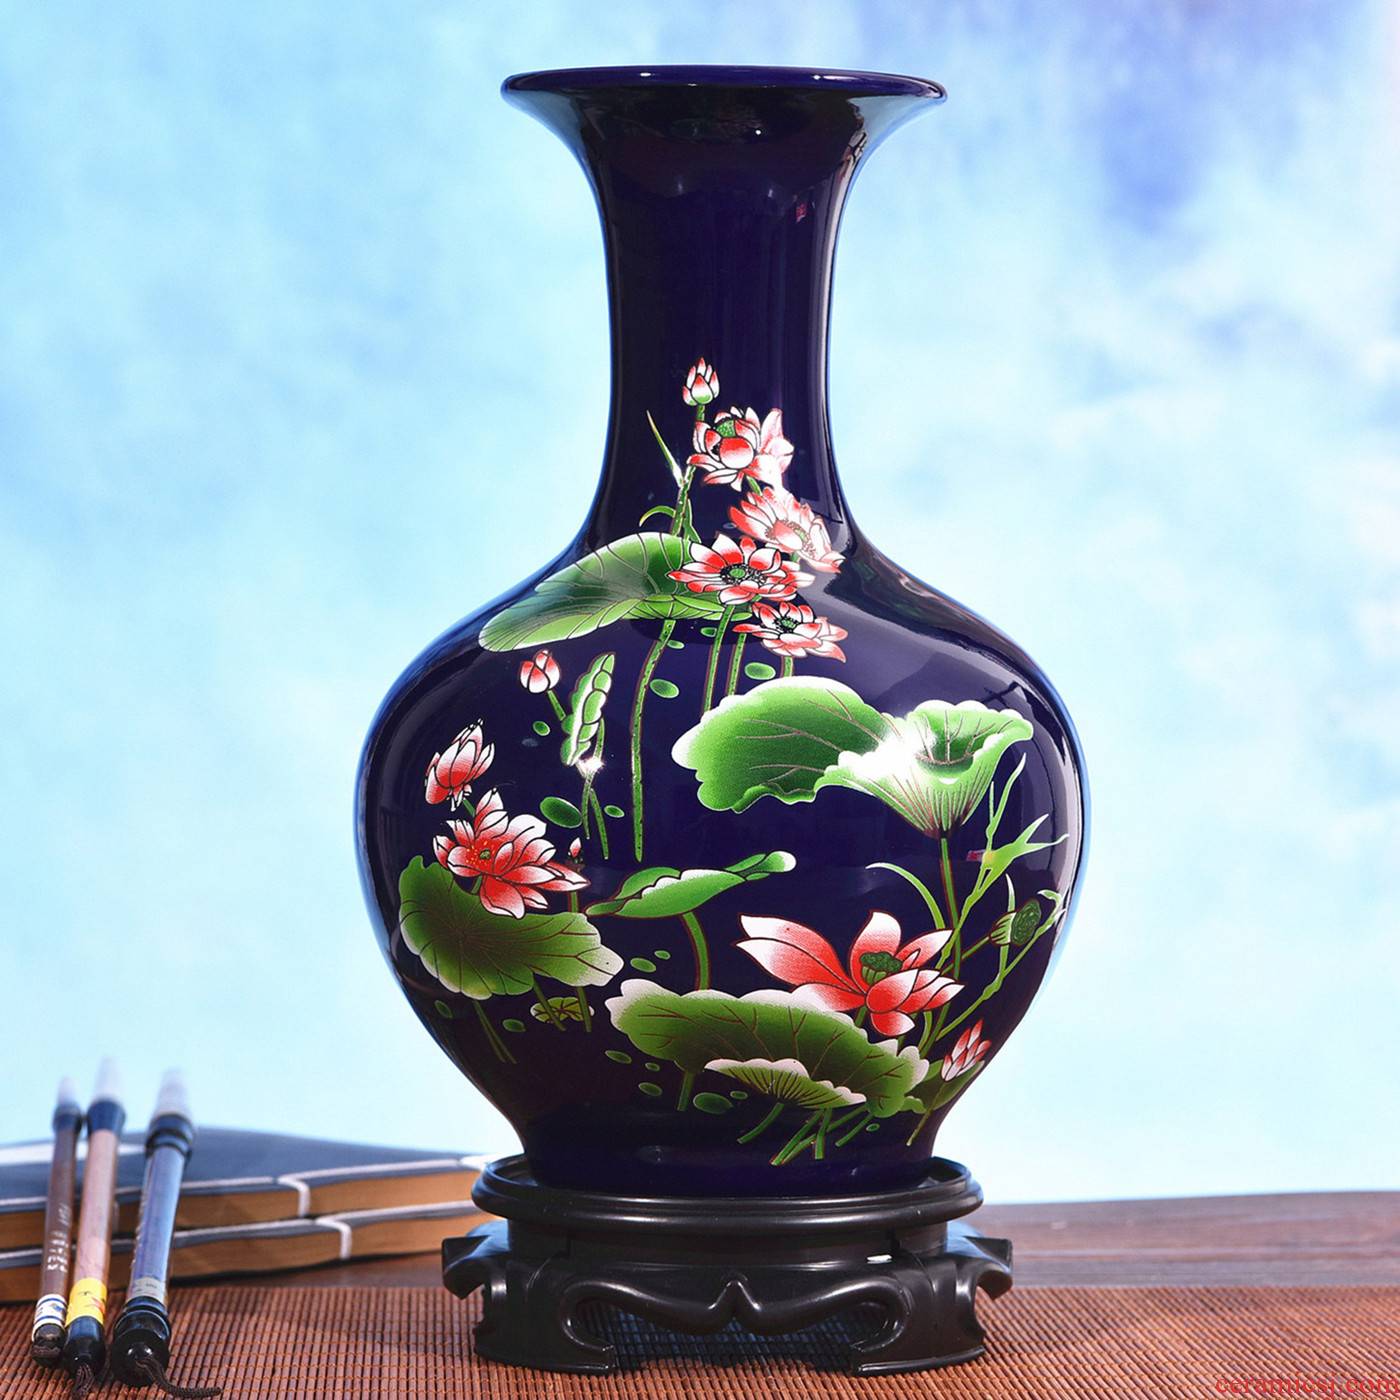 Jingdezhen ceramics XFX blue yan glaze enamel lotus flower vase household adornment handicraft furnishing articles gift